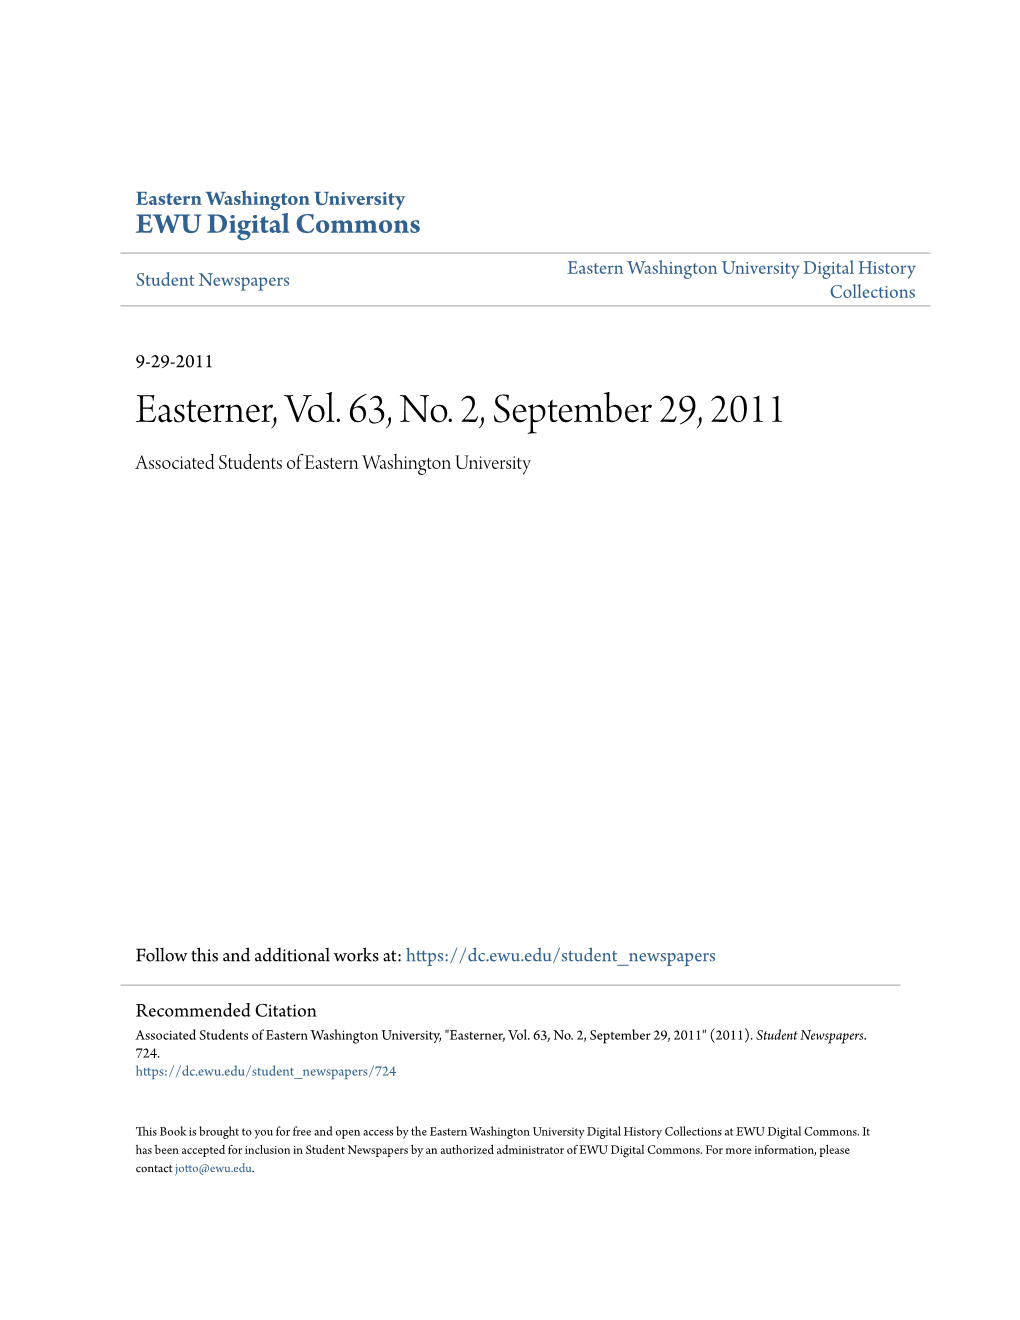 Easterner, Vol. 63, No. 2, September 29, 2011 Associated Students of Eastern Washington University